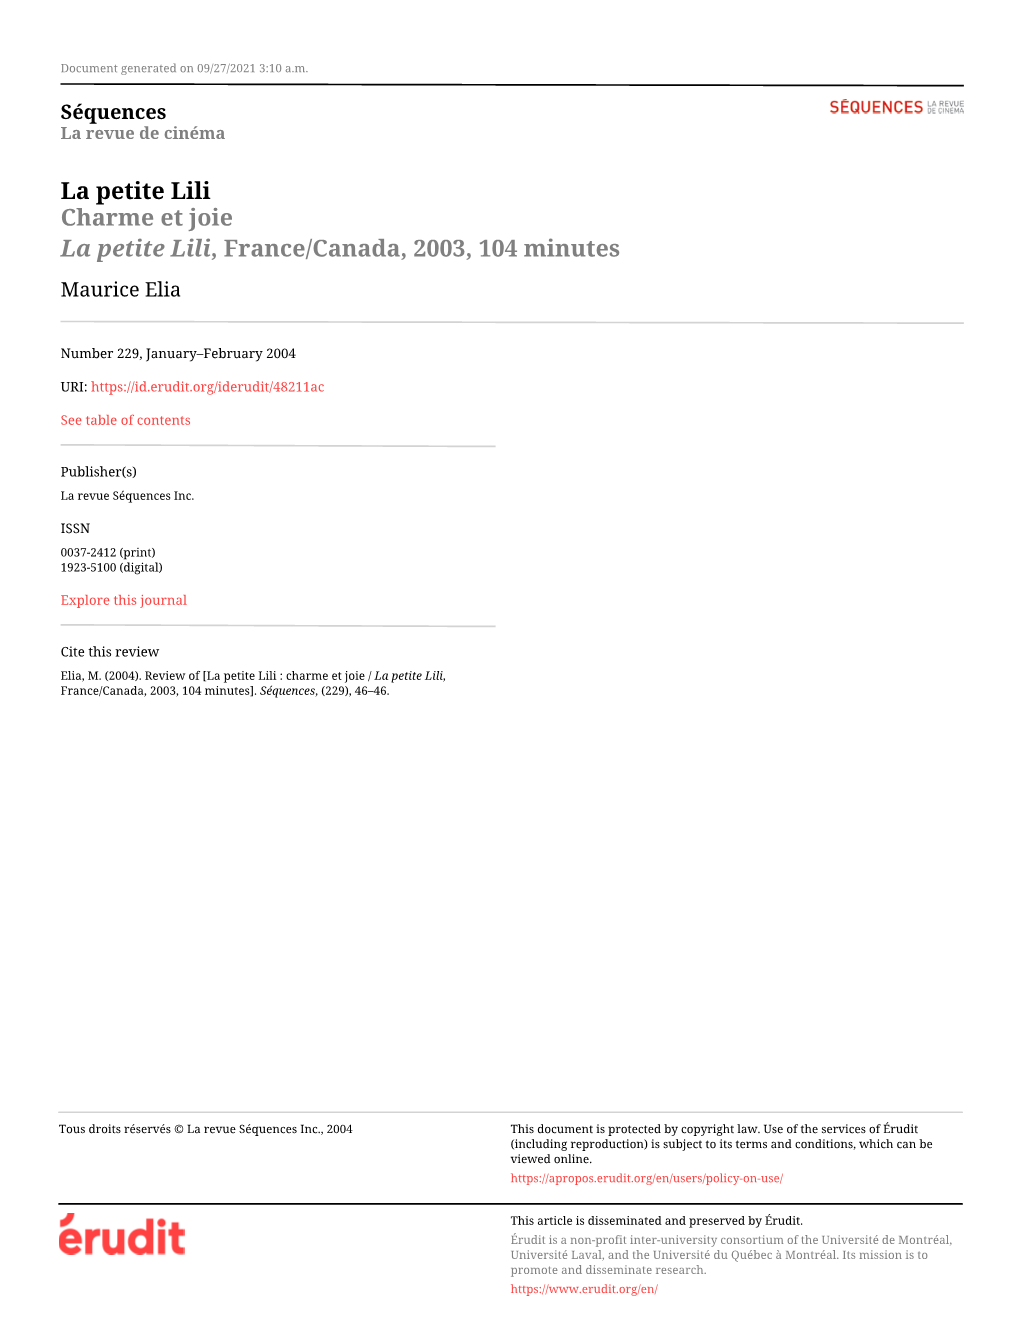 La Petite Lili Charme Et Joie La Petite Lili, France/Canada, 2003, 104 Minutes Maurice Elia